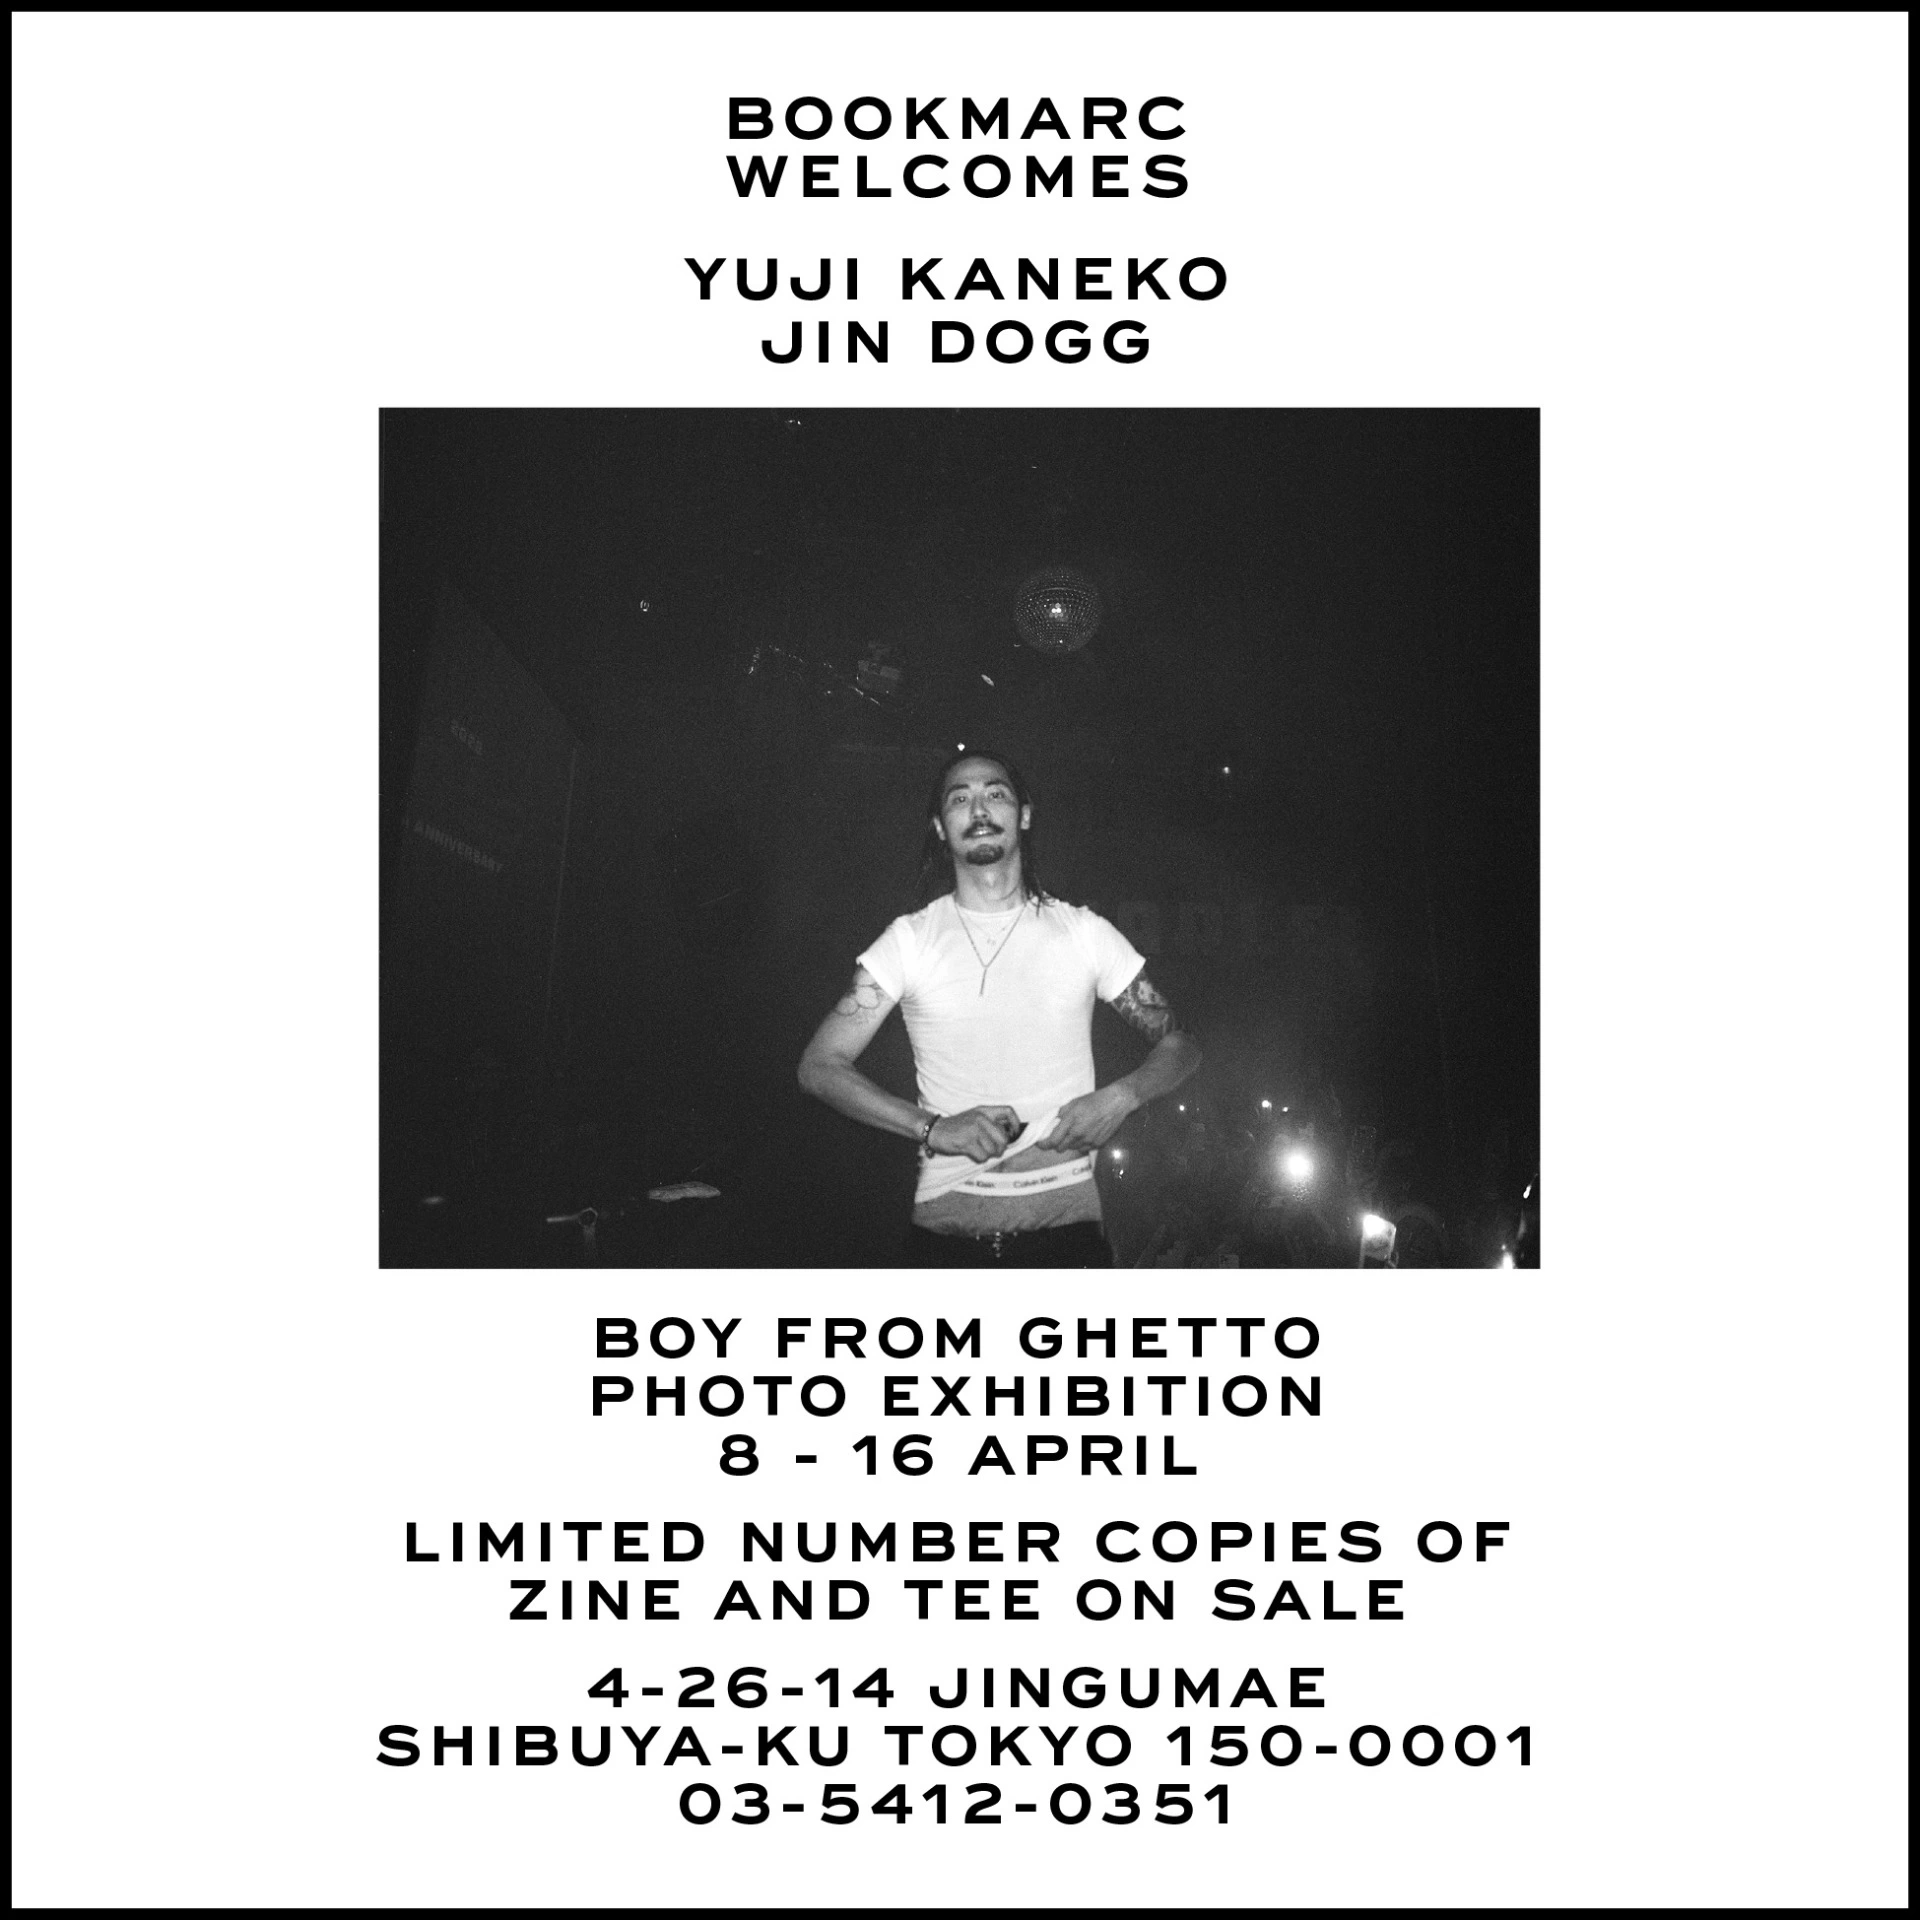 Yuji Kaneko x Jin Dogg 『BOY FROM GHETTO』 photo exhibition